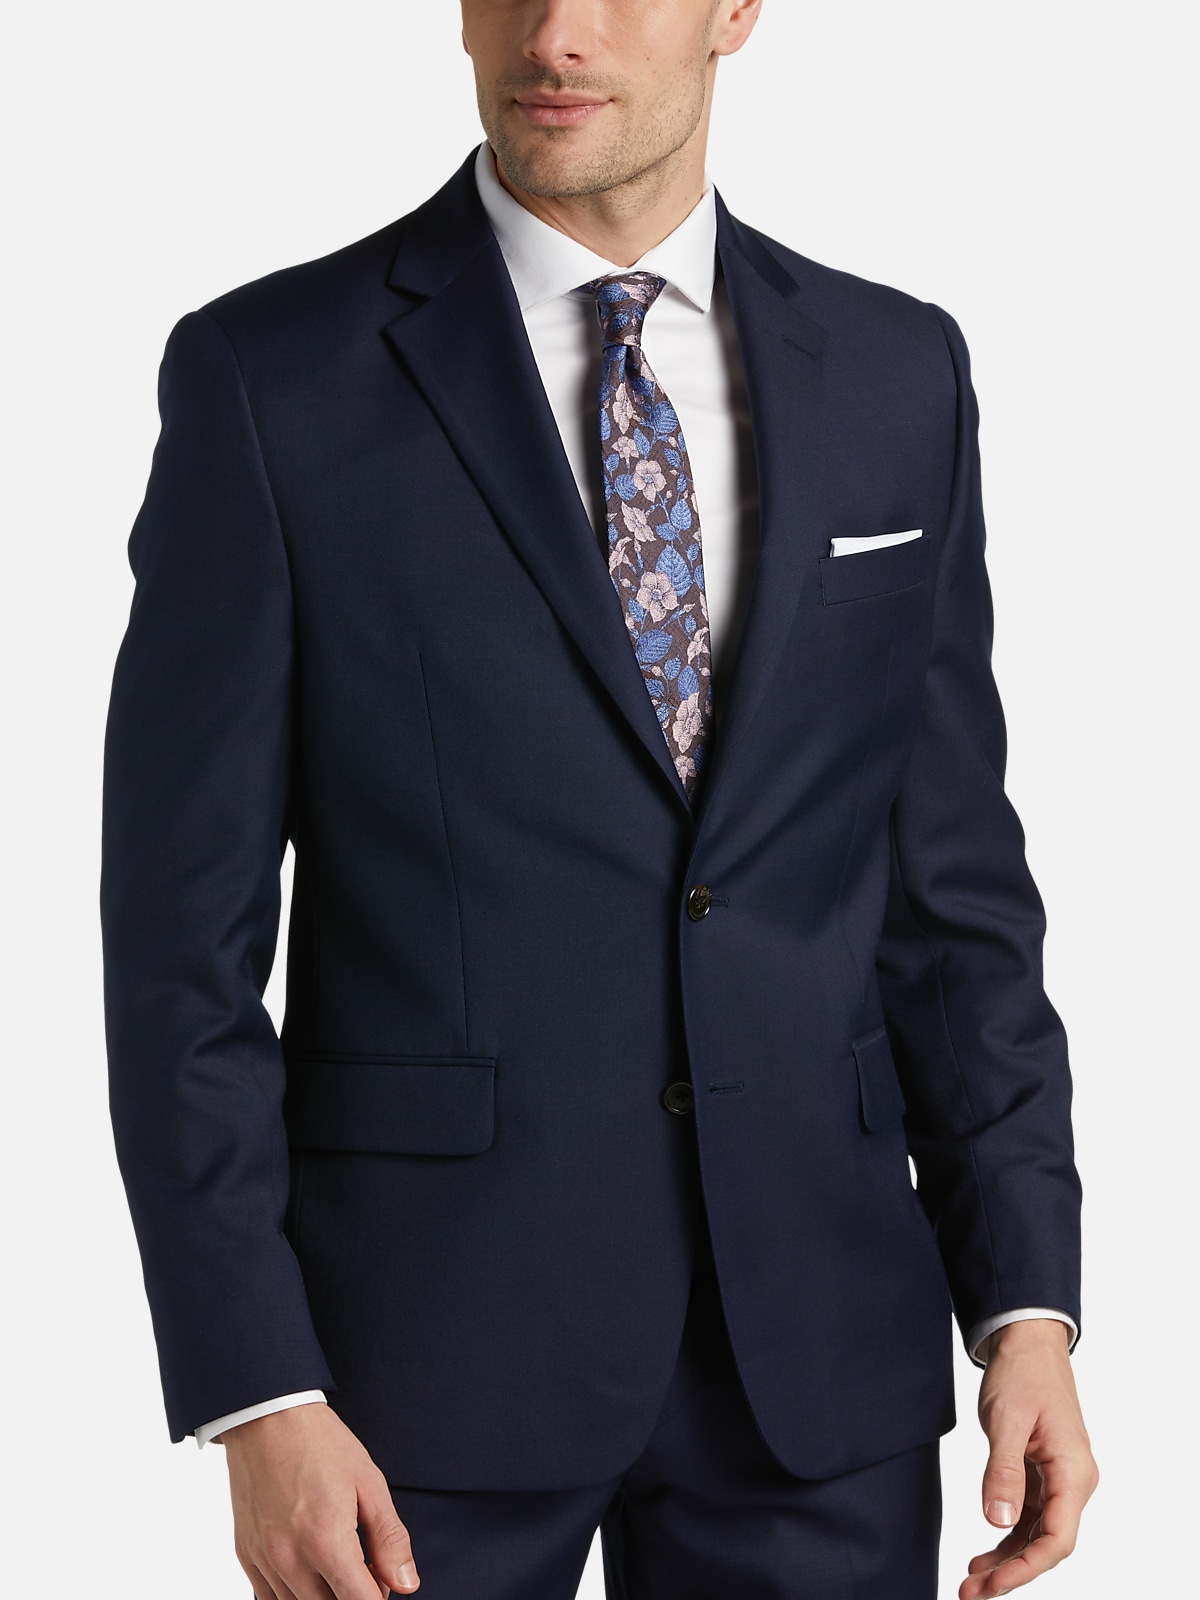 Joseph Abboud Classic Fit Notch Collar Suit Separates Jacket | All ...